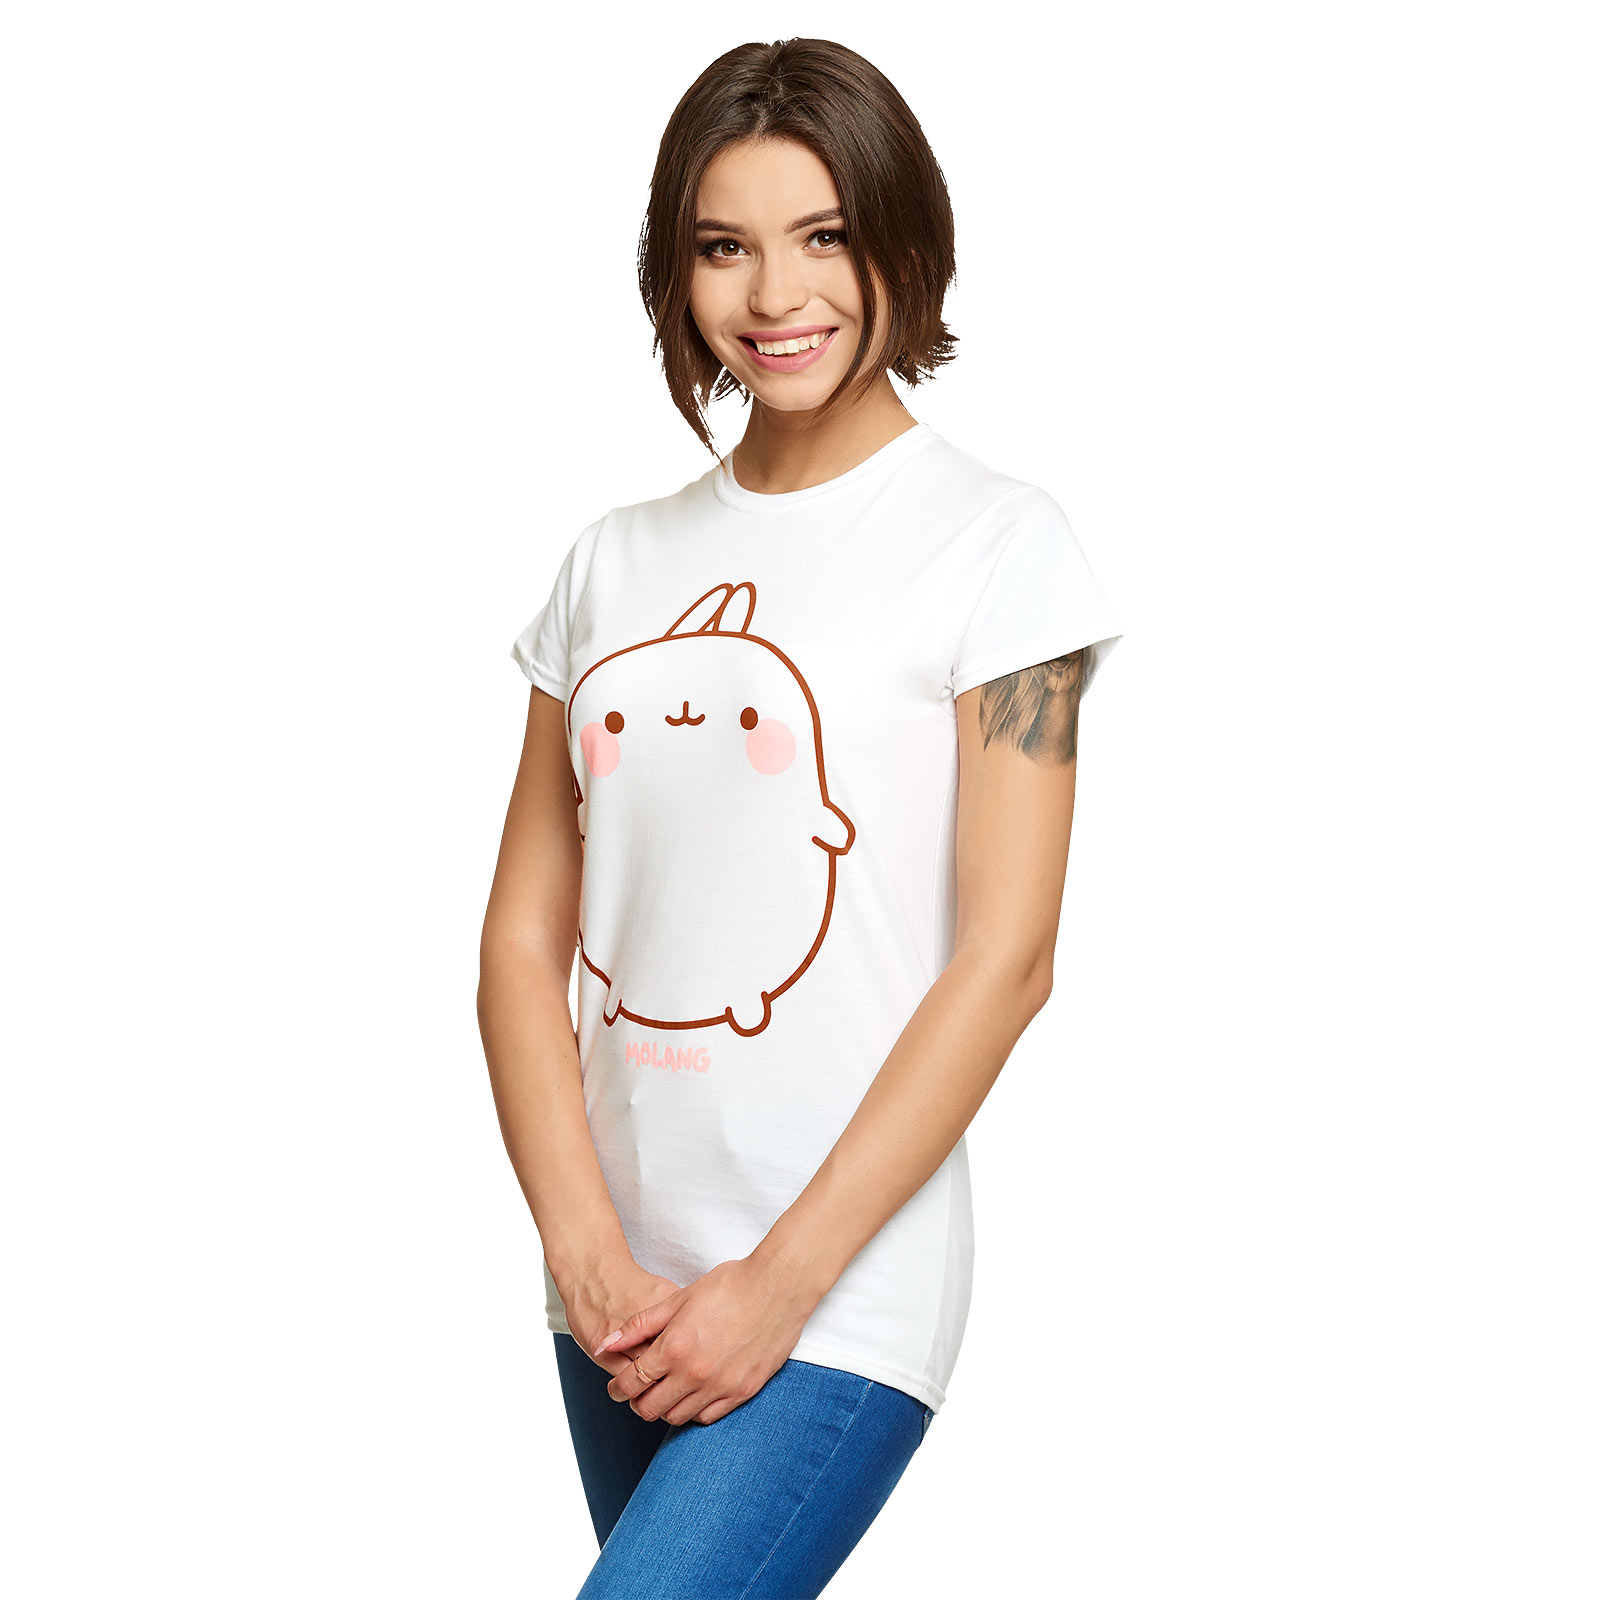 Molang - T-shirt femme Smile blanc